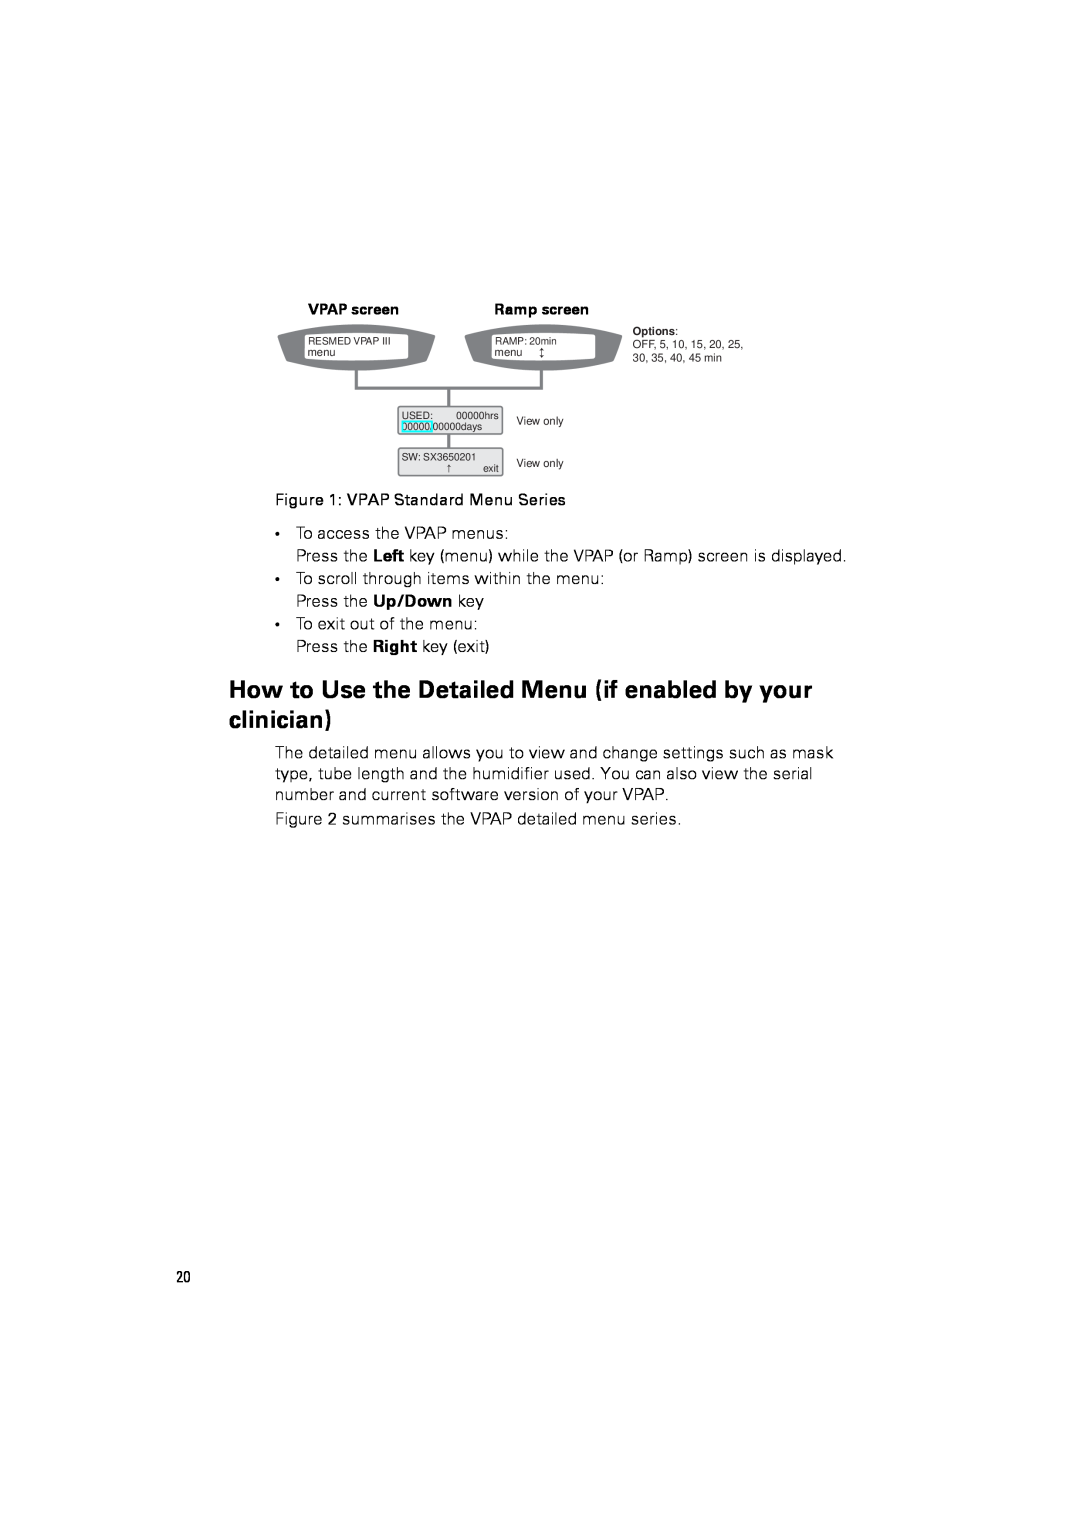 ResMed III user manual To access the VPAP menus 